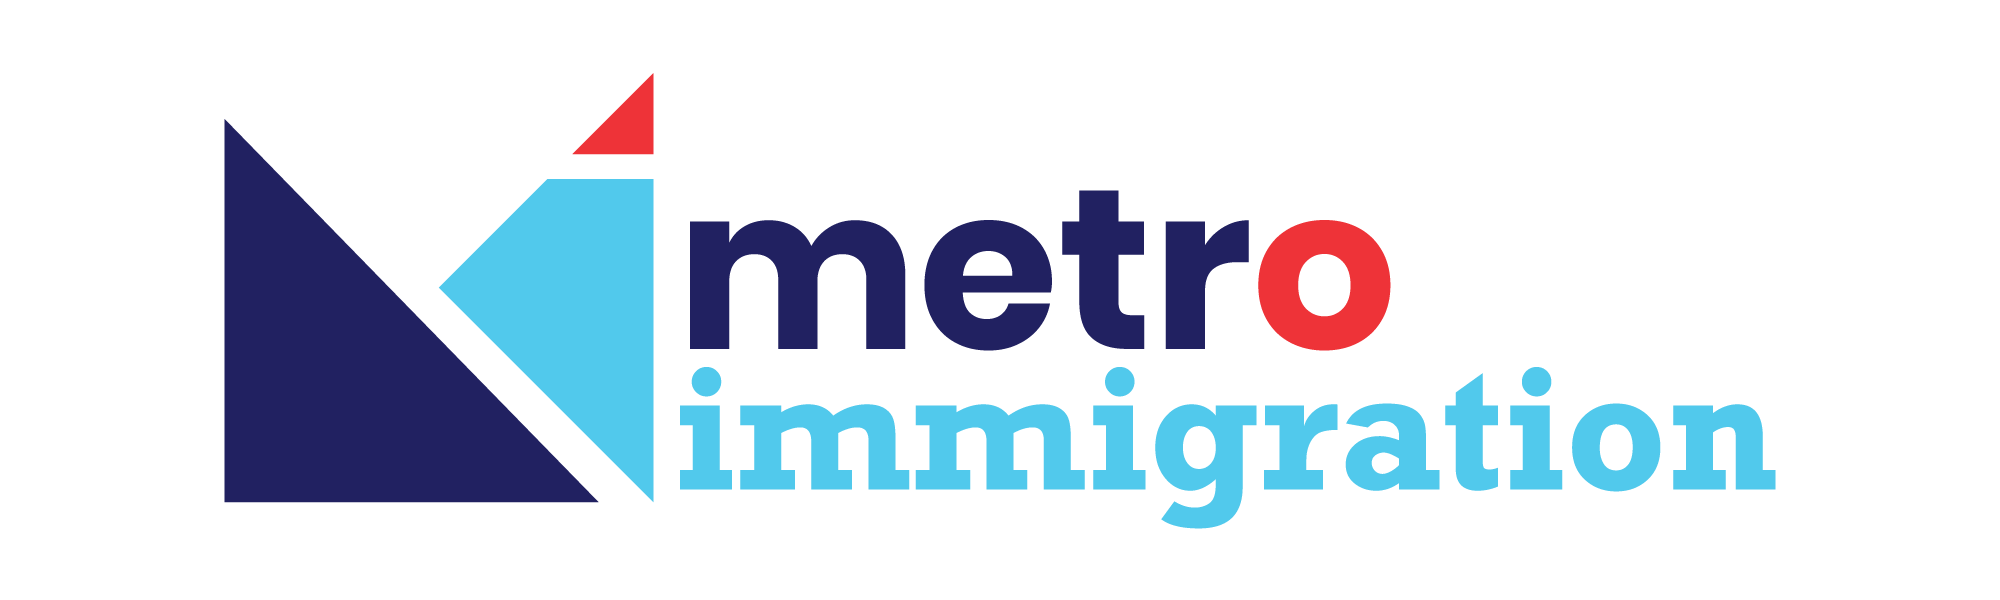 metro-immigration